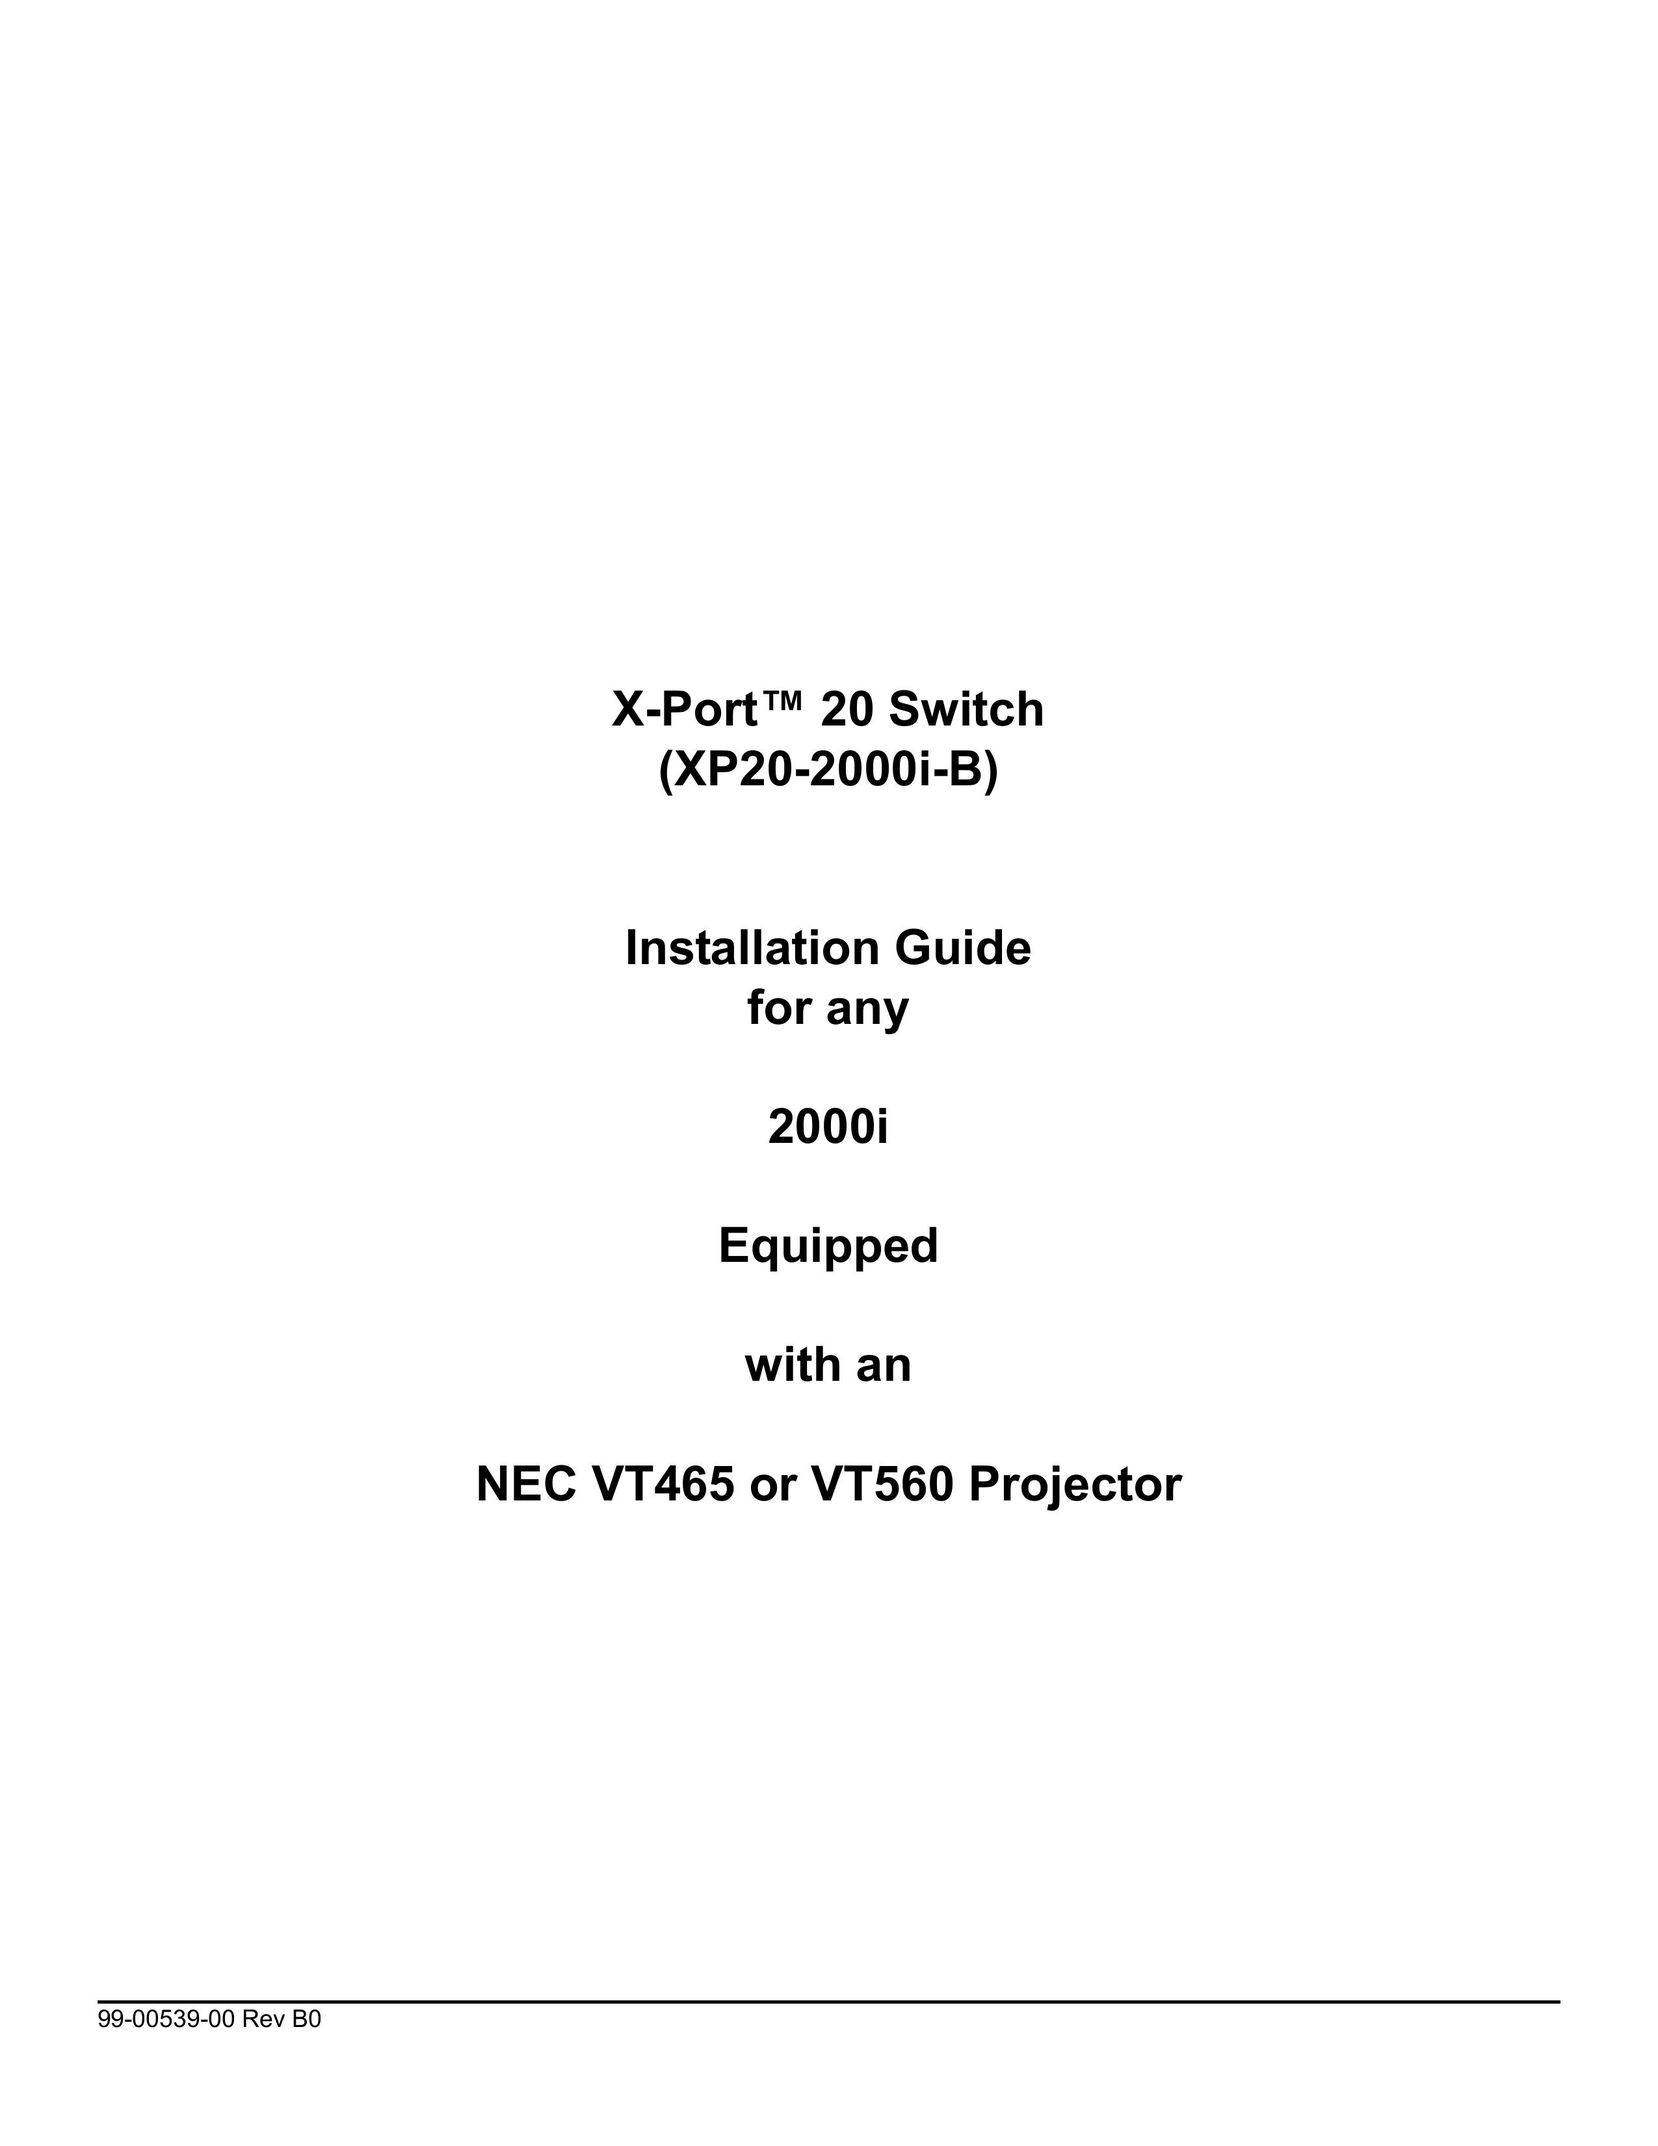 Smart Technologies (XP20-2000i-B) Projector User Manual